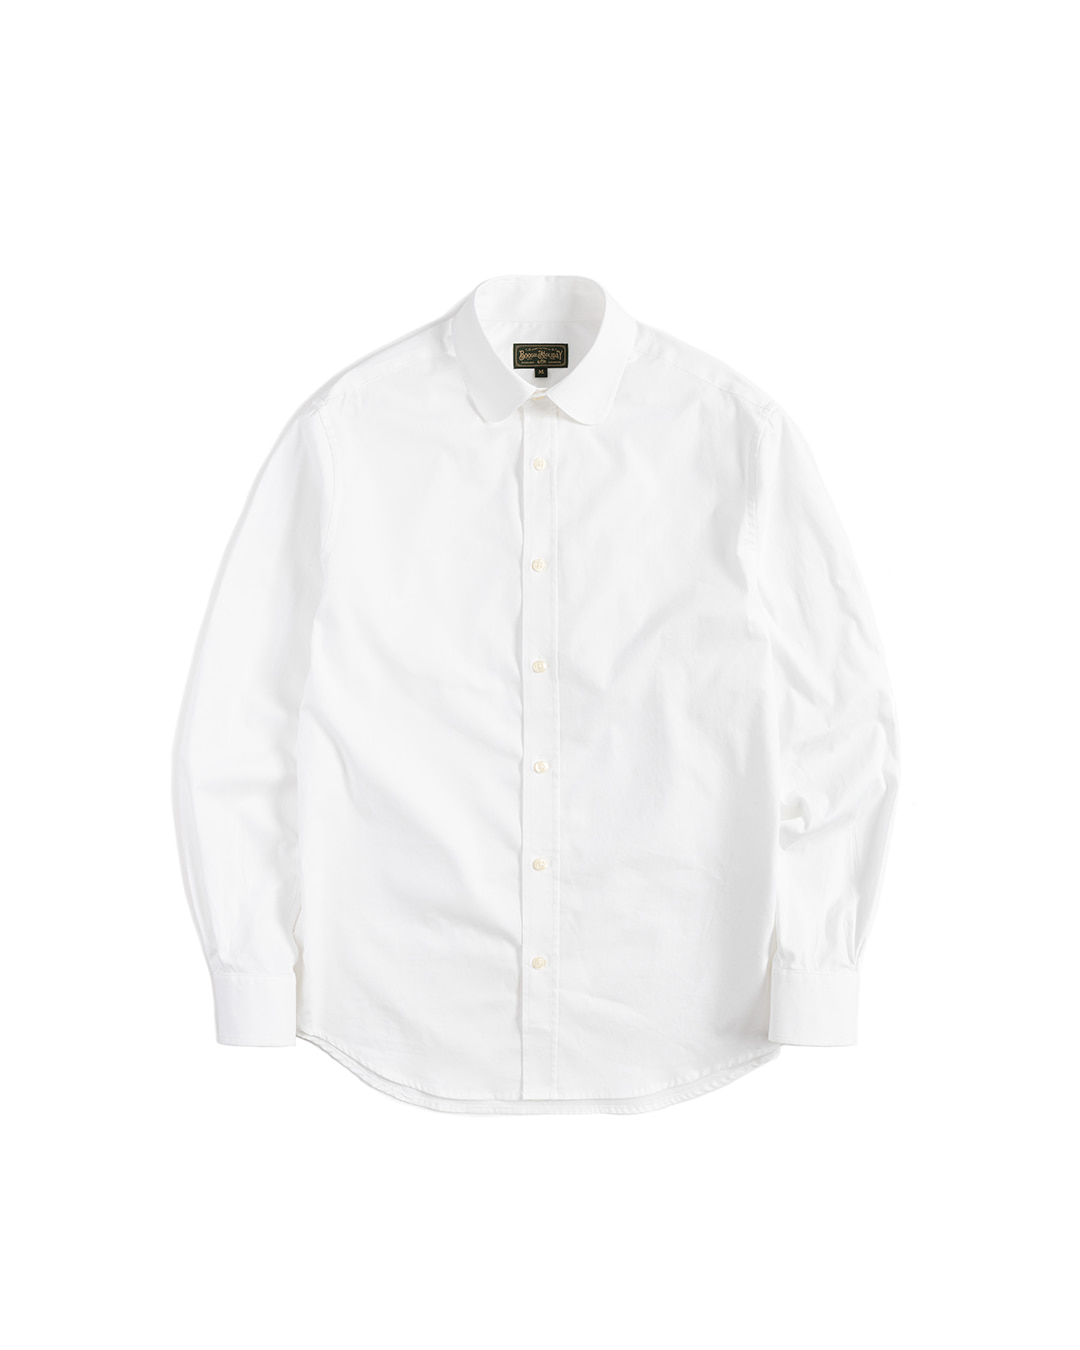 10 CLUB COLLAR DRESS SHIRT (white)